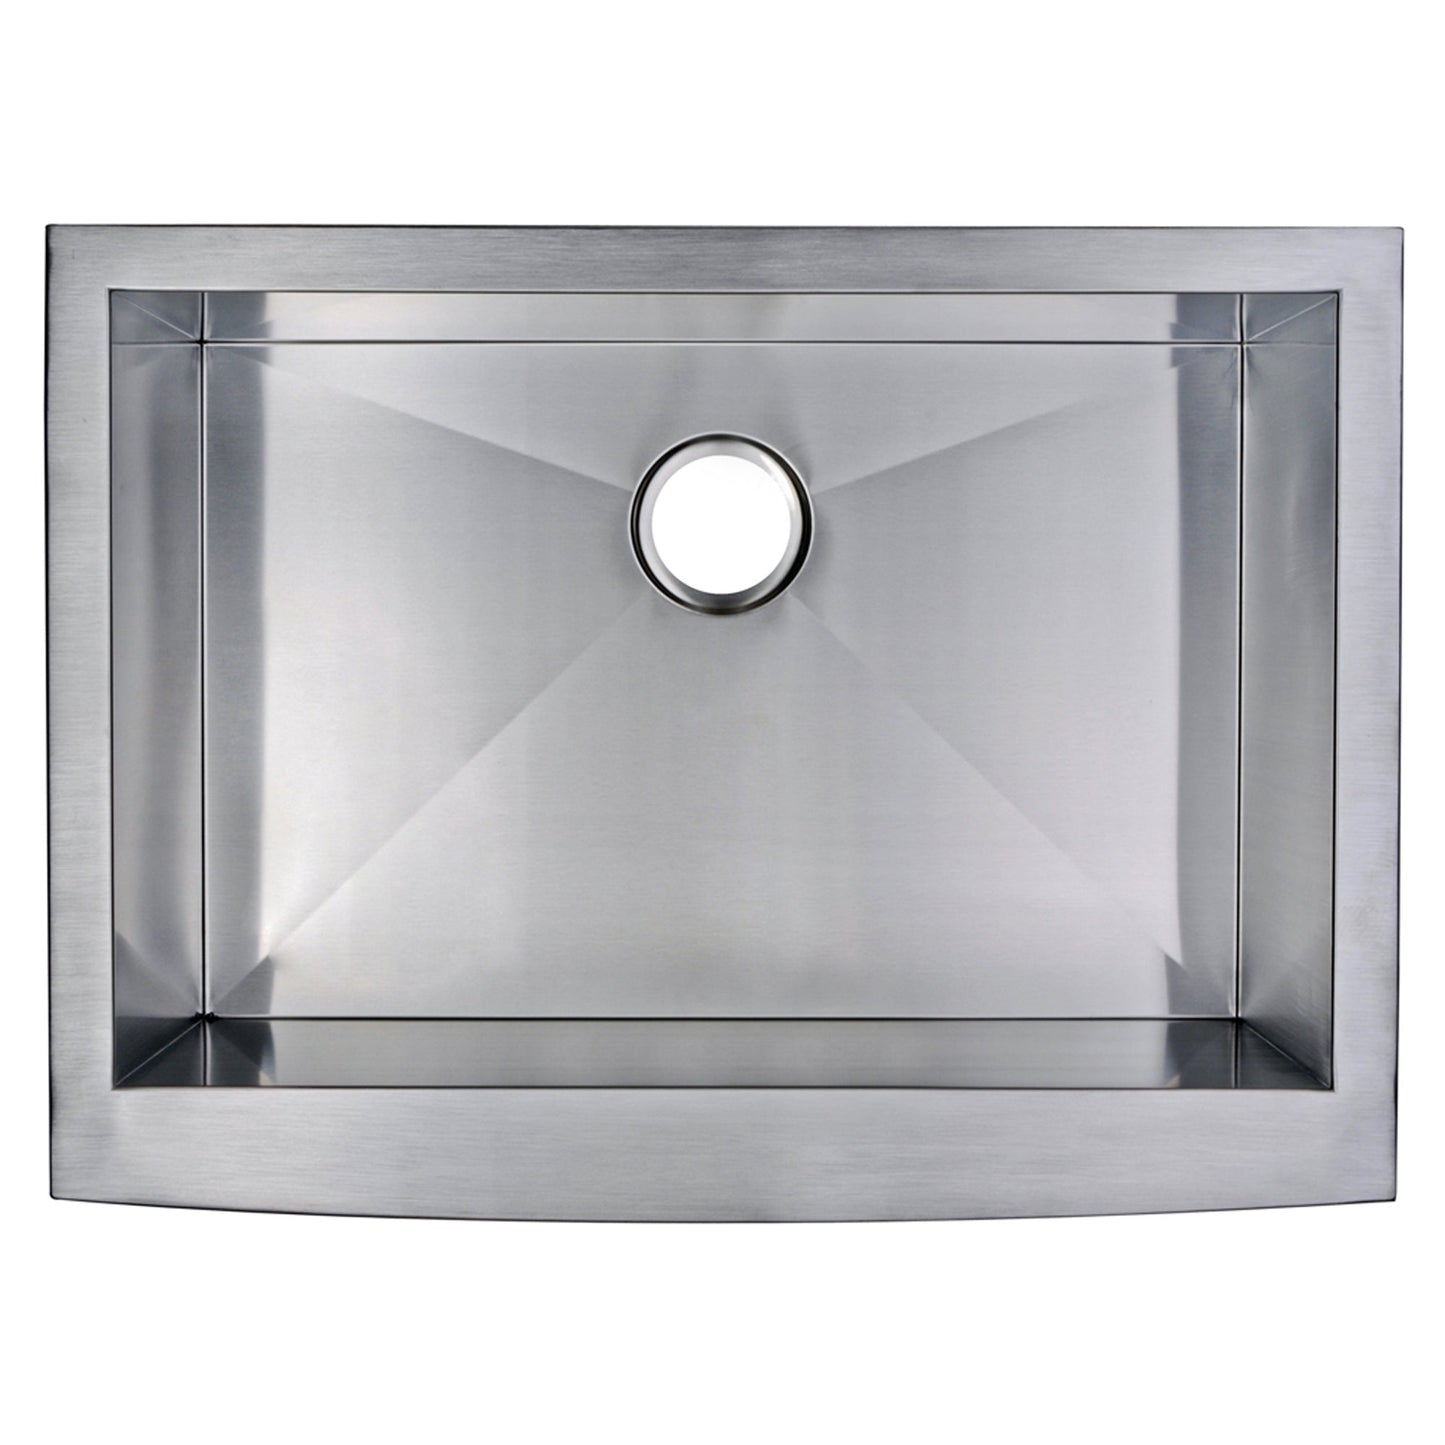 30 Inch X 22 Inch Zero Radius Single Bowl Stainless Steel Hand Made Apron Front Kitchen Sink